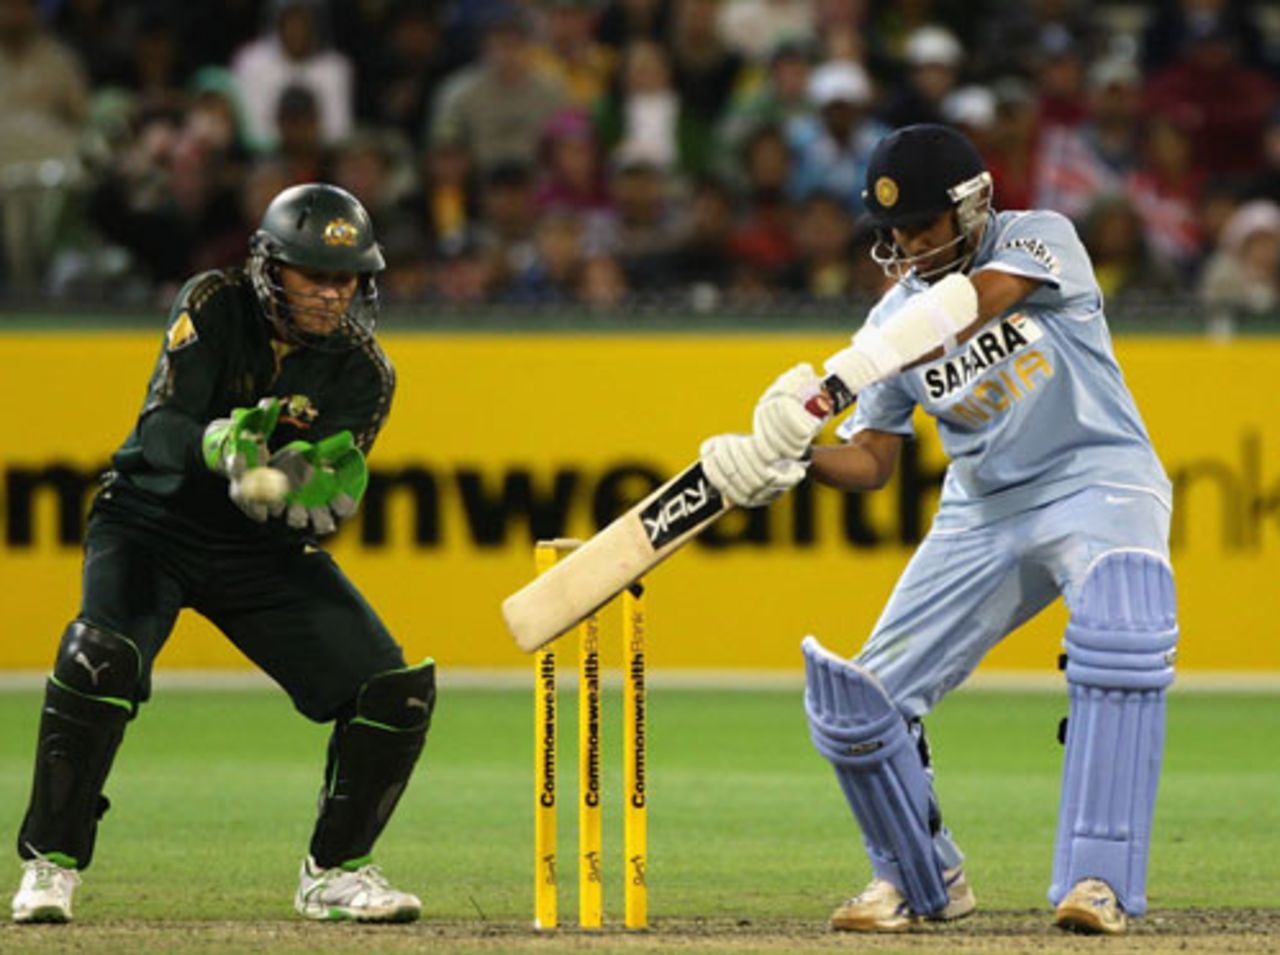 Rohit Sharma's patient 39 ensured India's victory, Australia v India, CB Series, 4th ODI, Melbourne, February 10, 2008